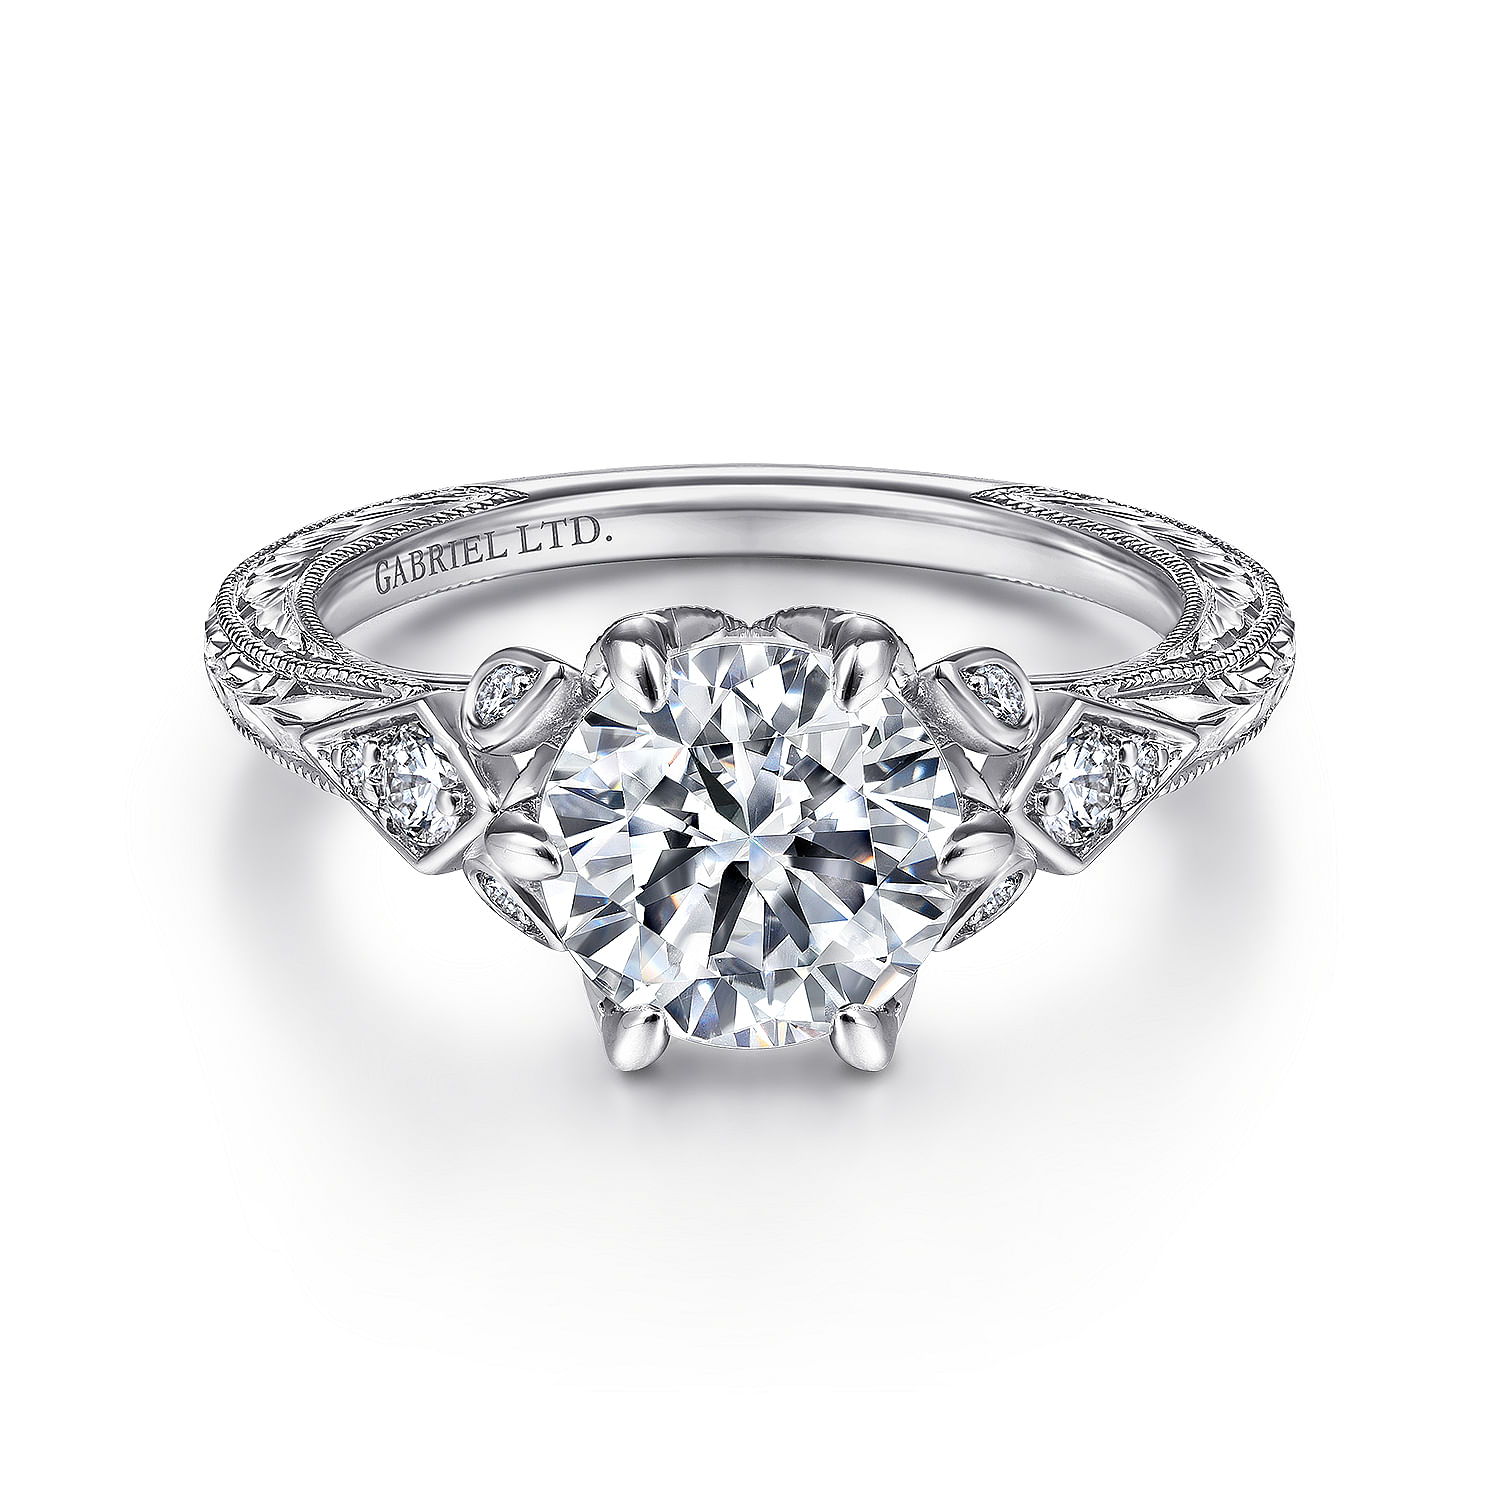 Vintage Inspired 18K White Gold Round Diamond Channel Set Engagement Ring